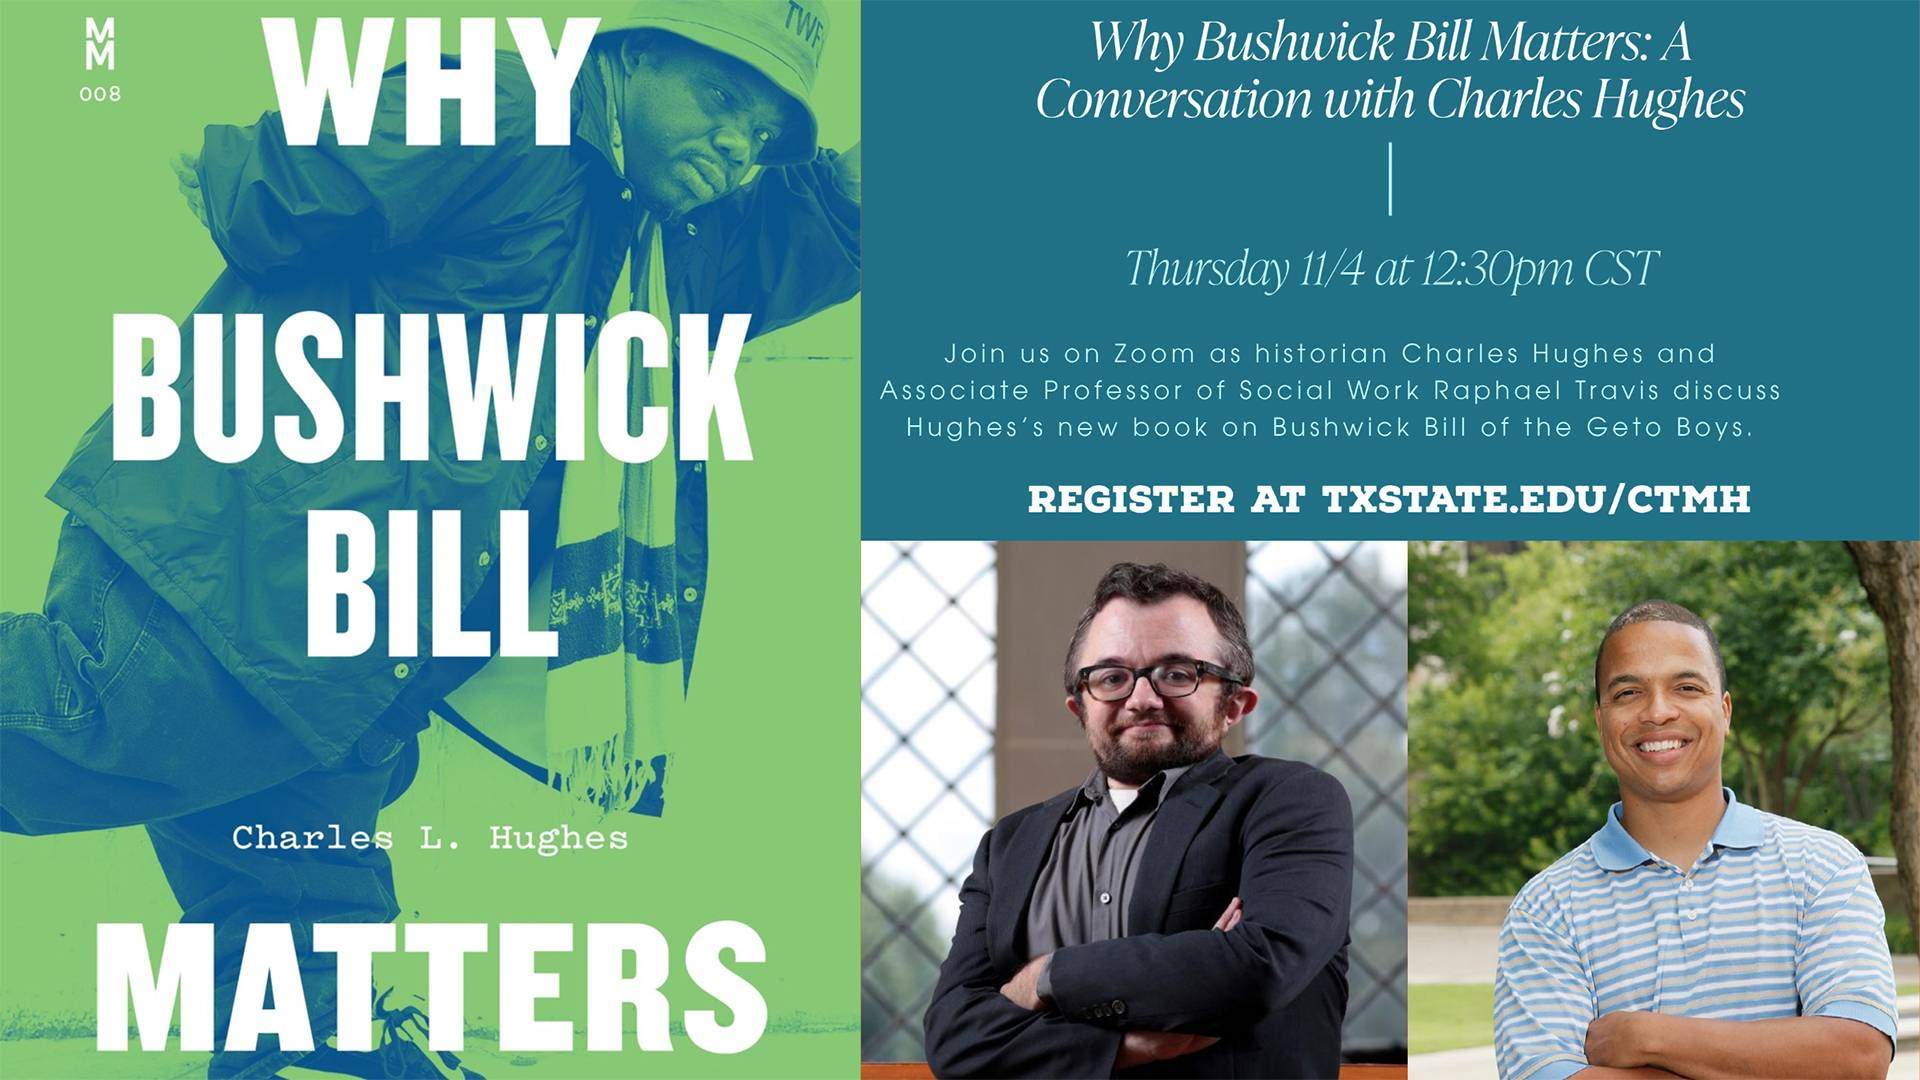 Why Bushwick Bill Matters event